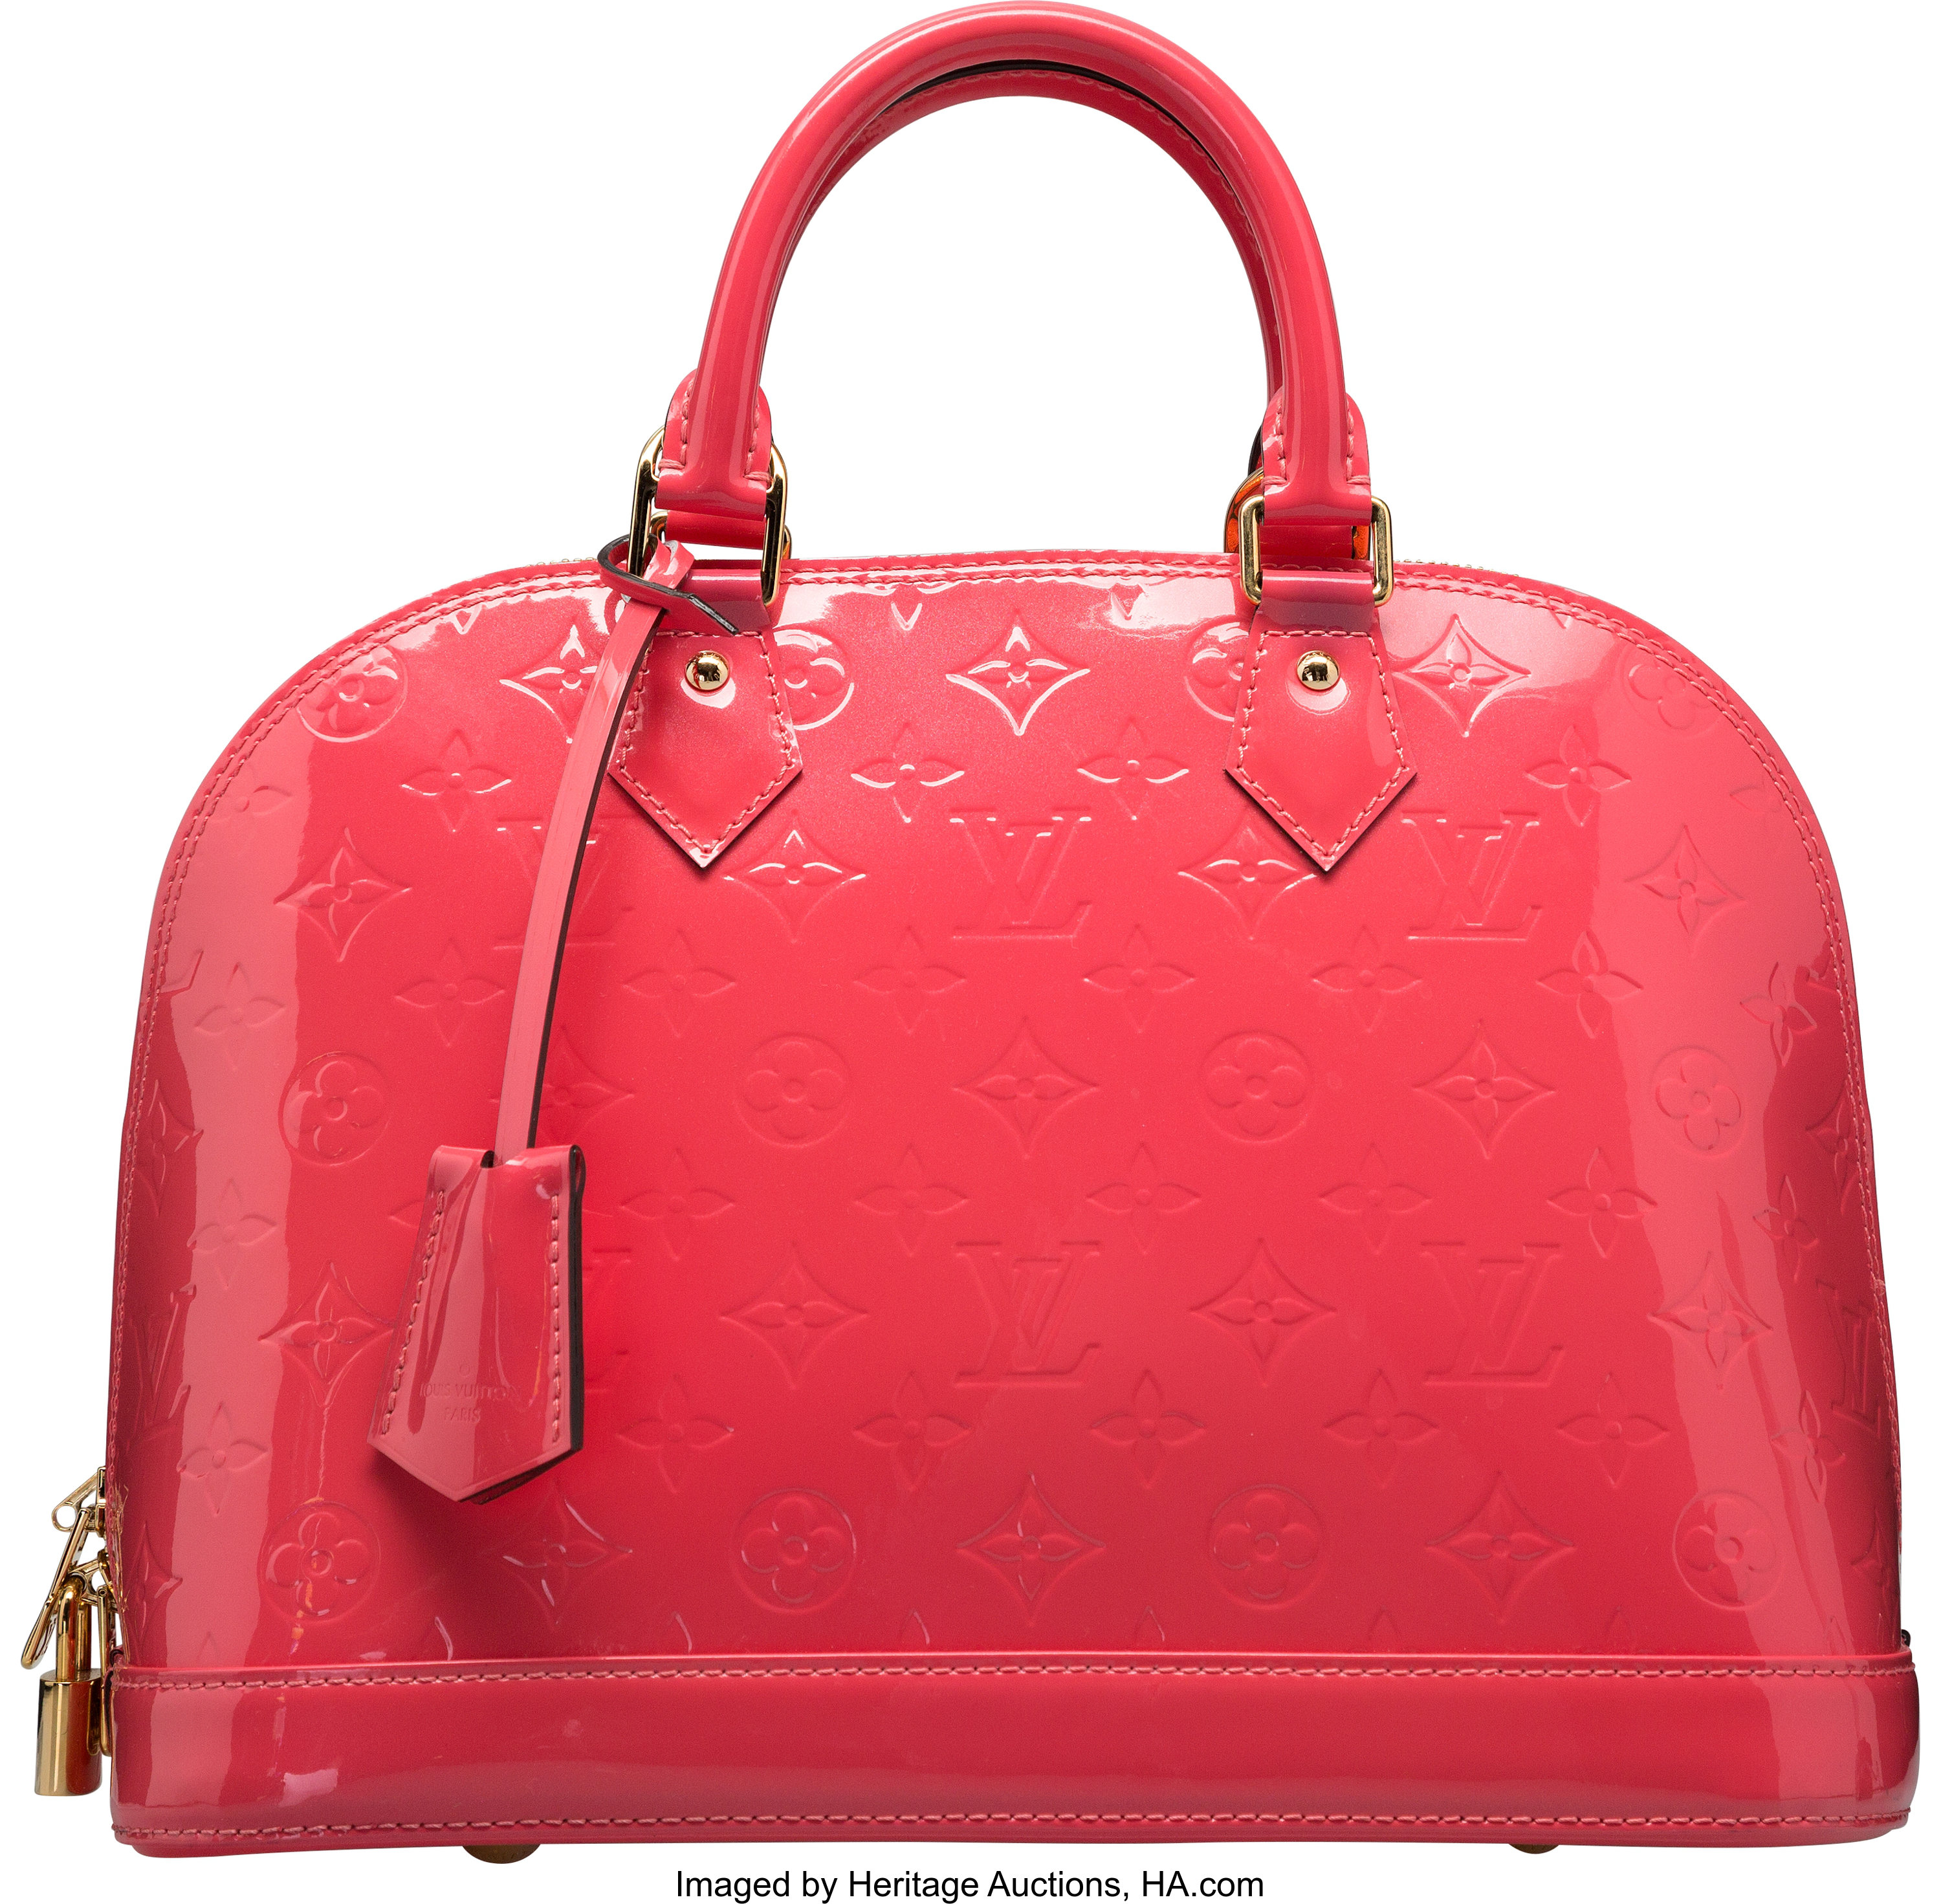 Sold at Auction: Louis Vuitton Vernis Leather Handbag